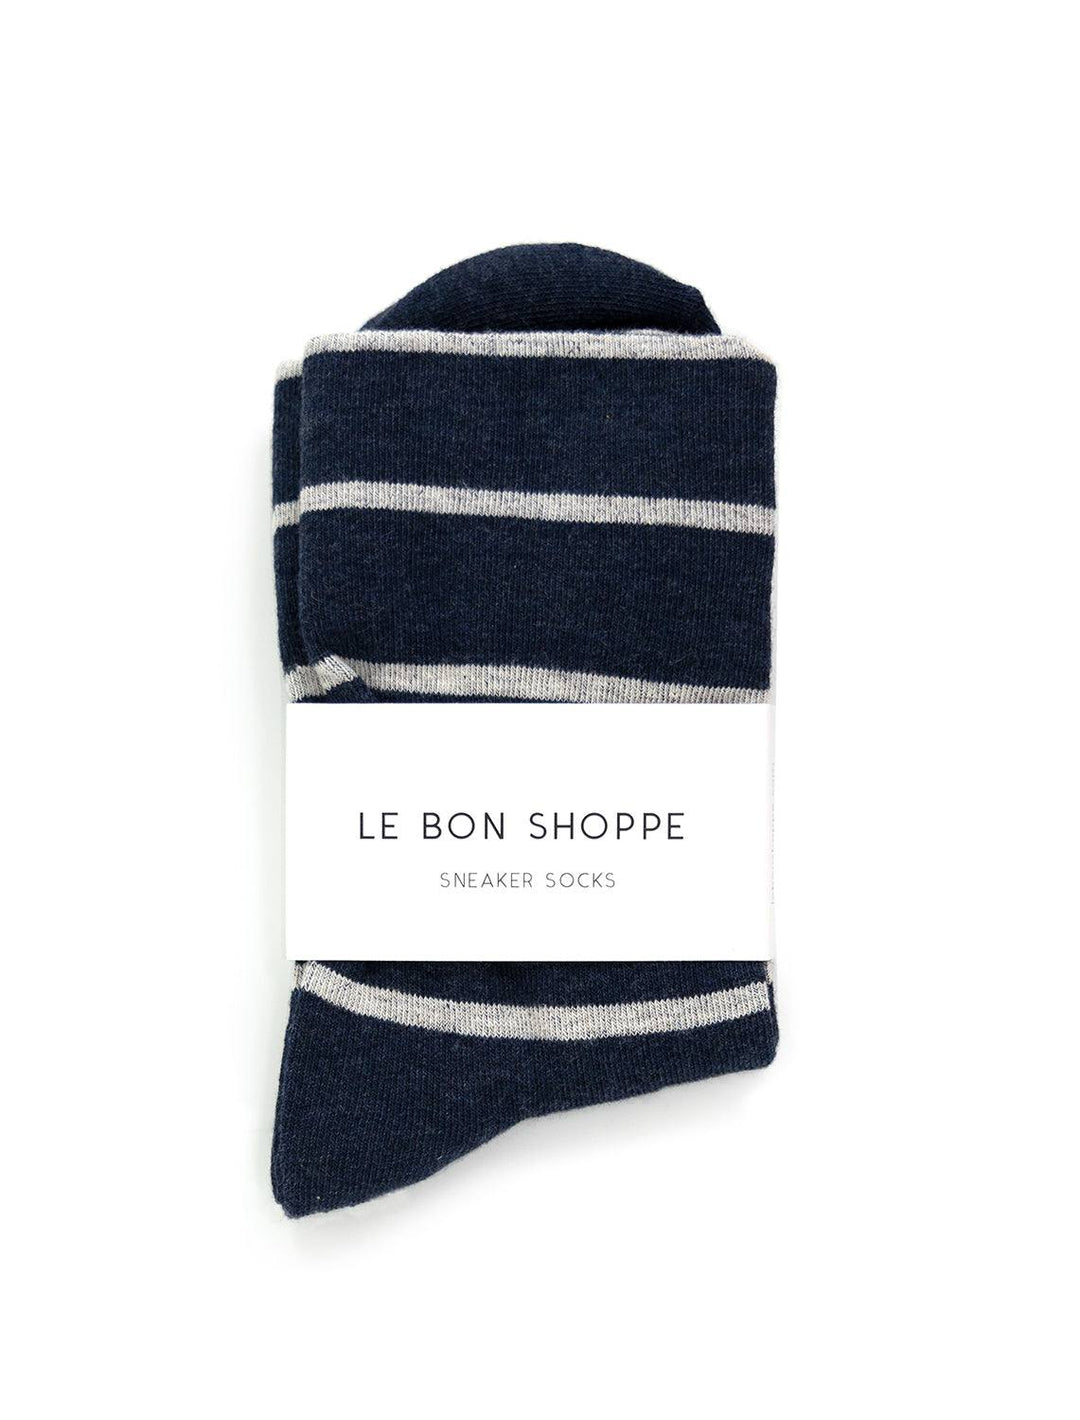 Le Bon Shoppe's wally socks in marine